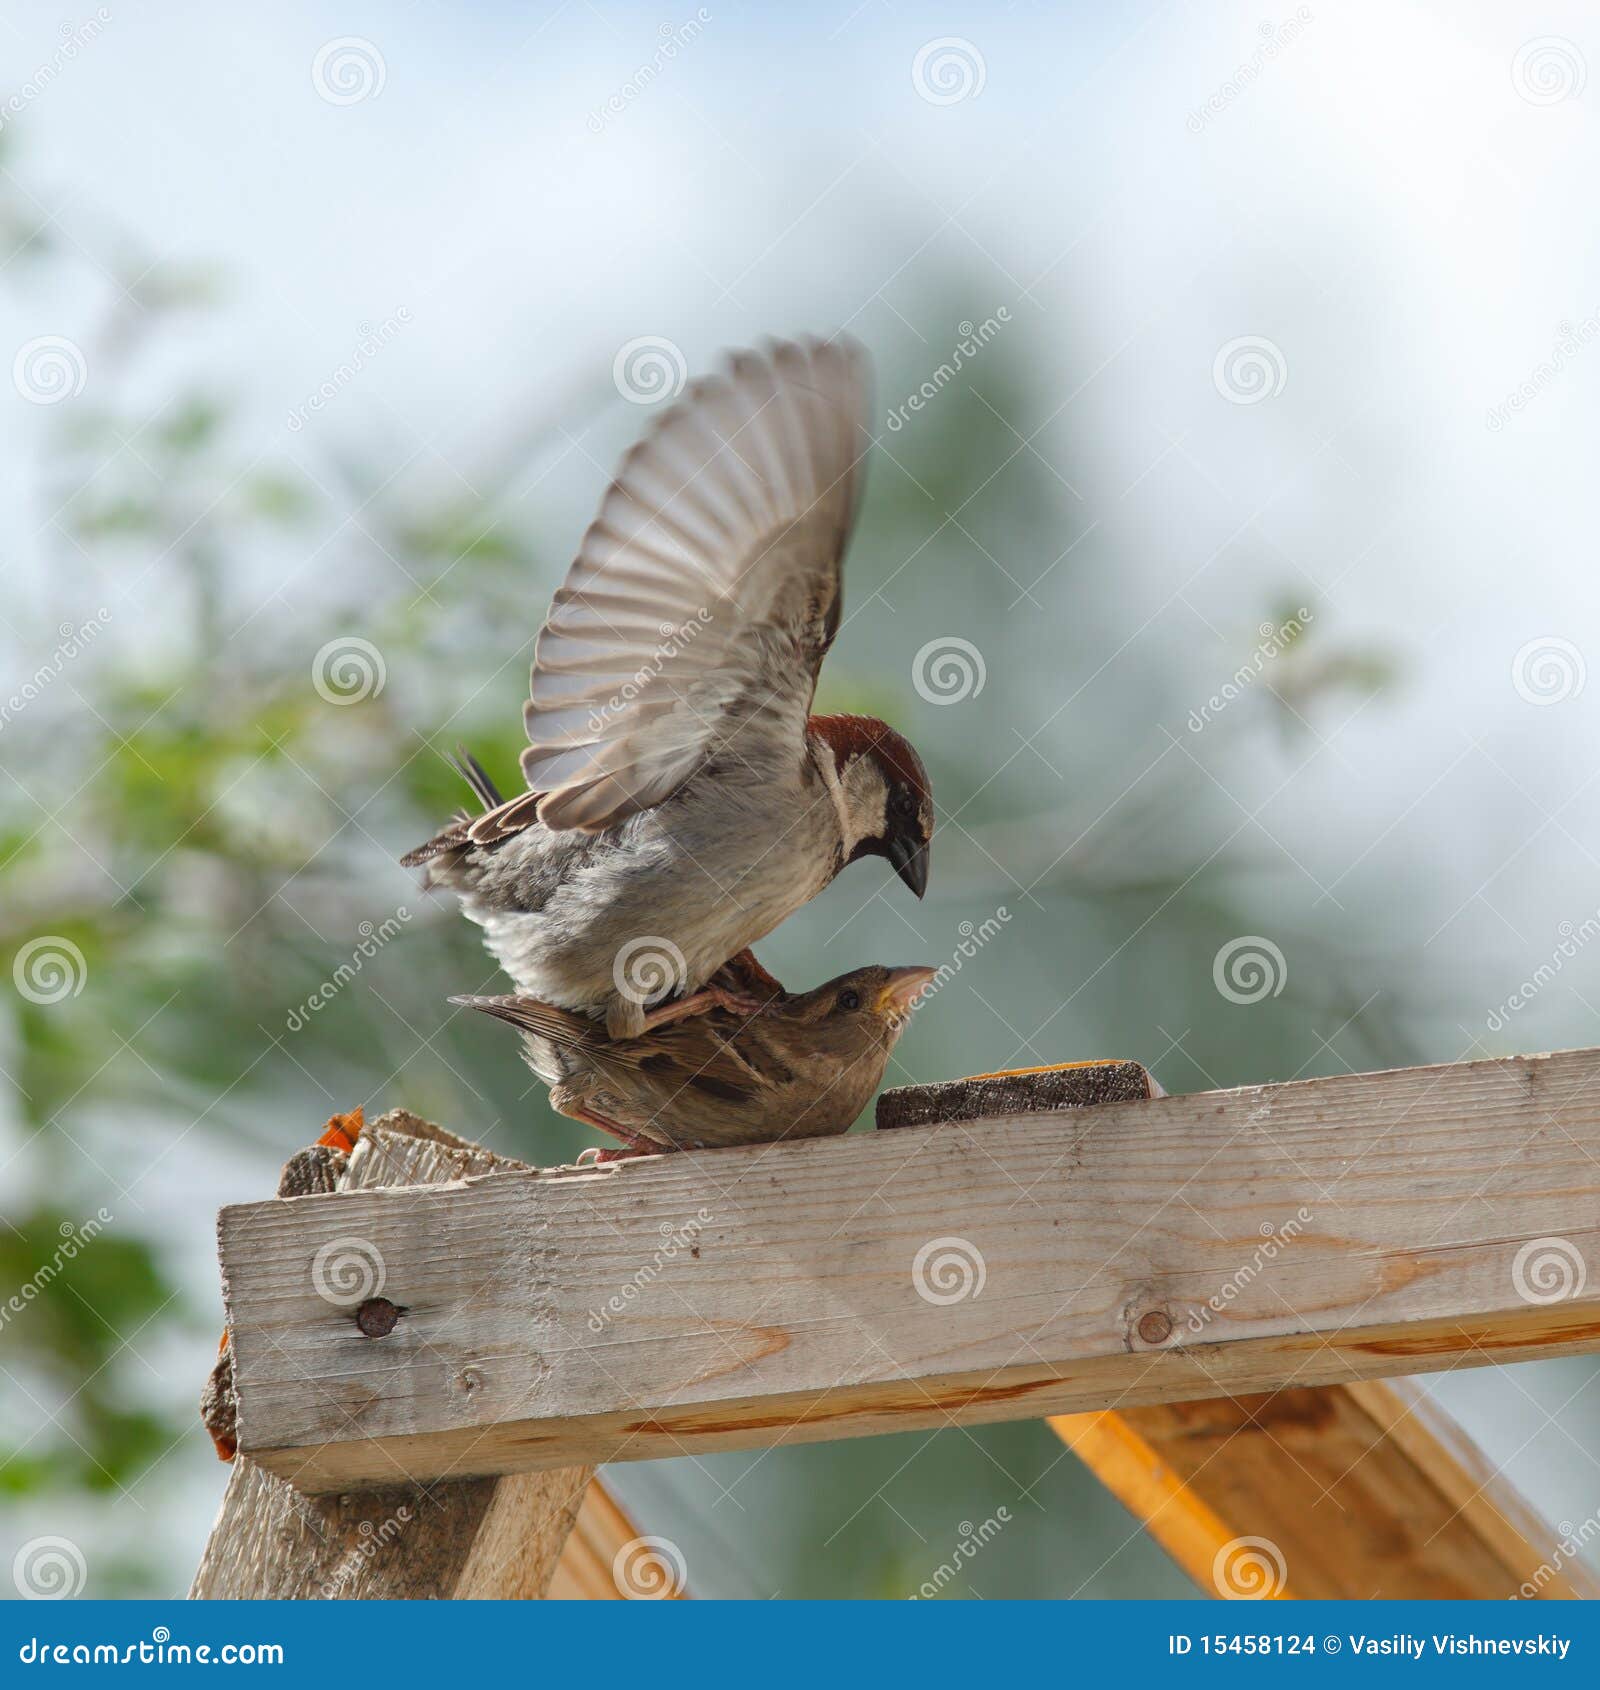 house sparrow, passer domesticus